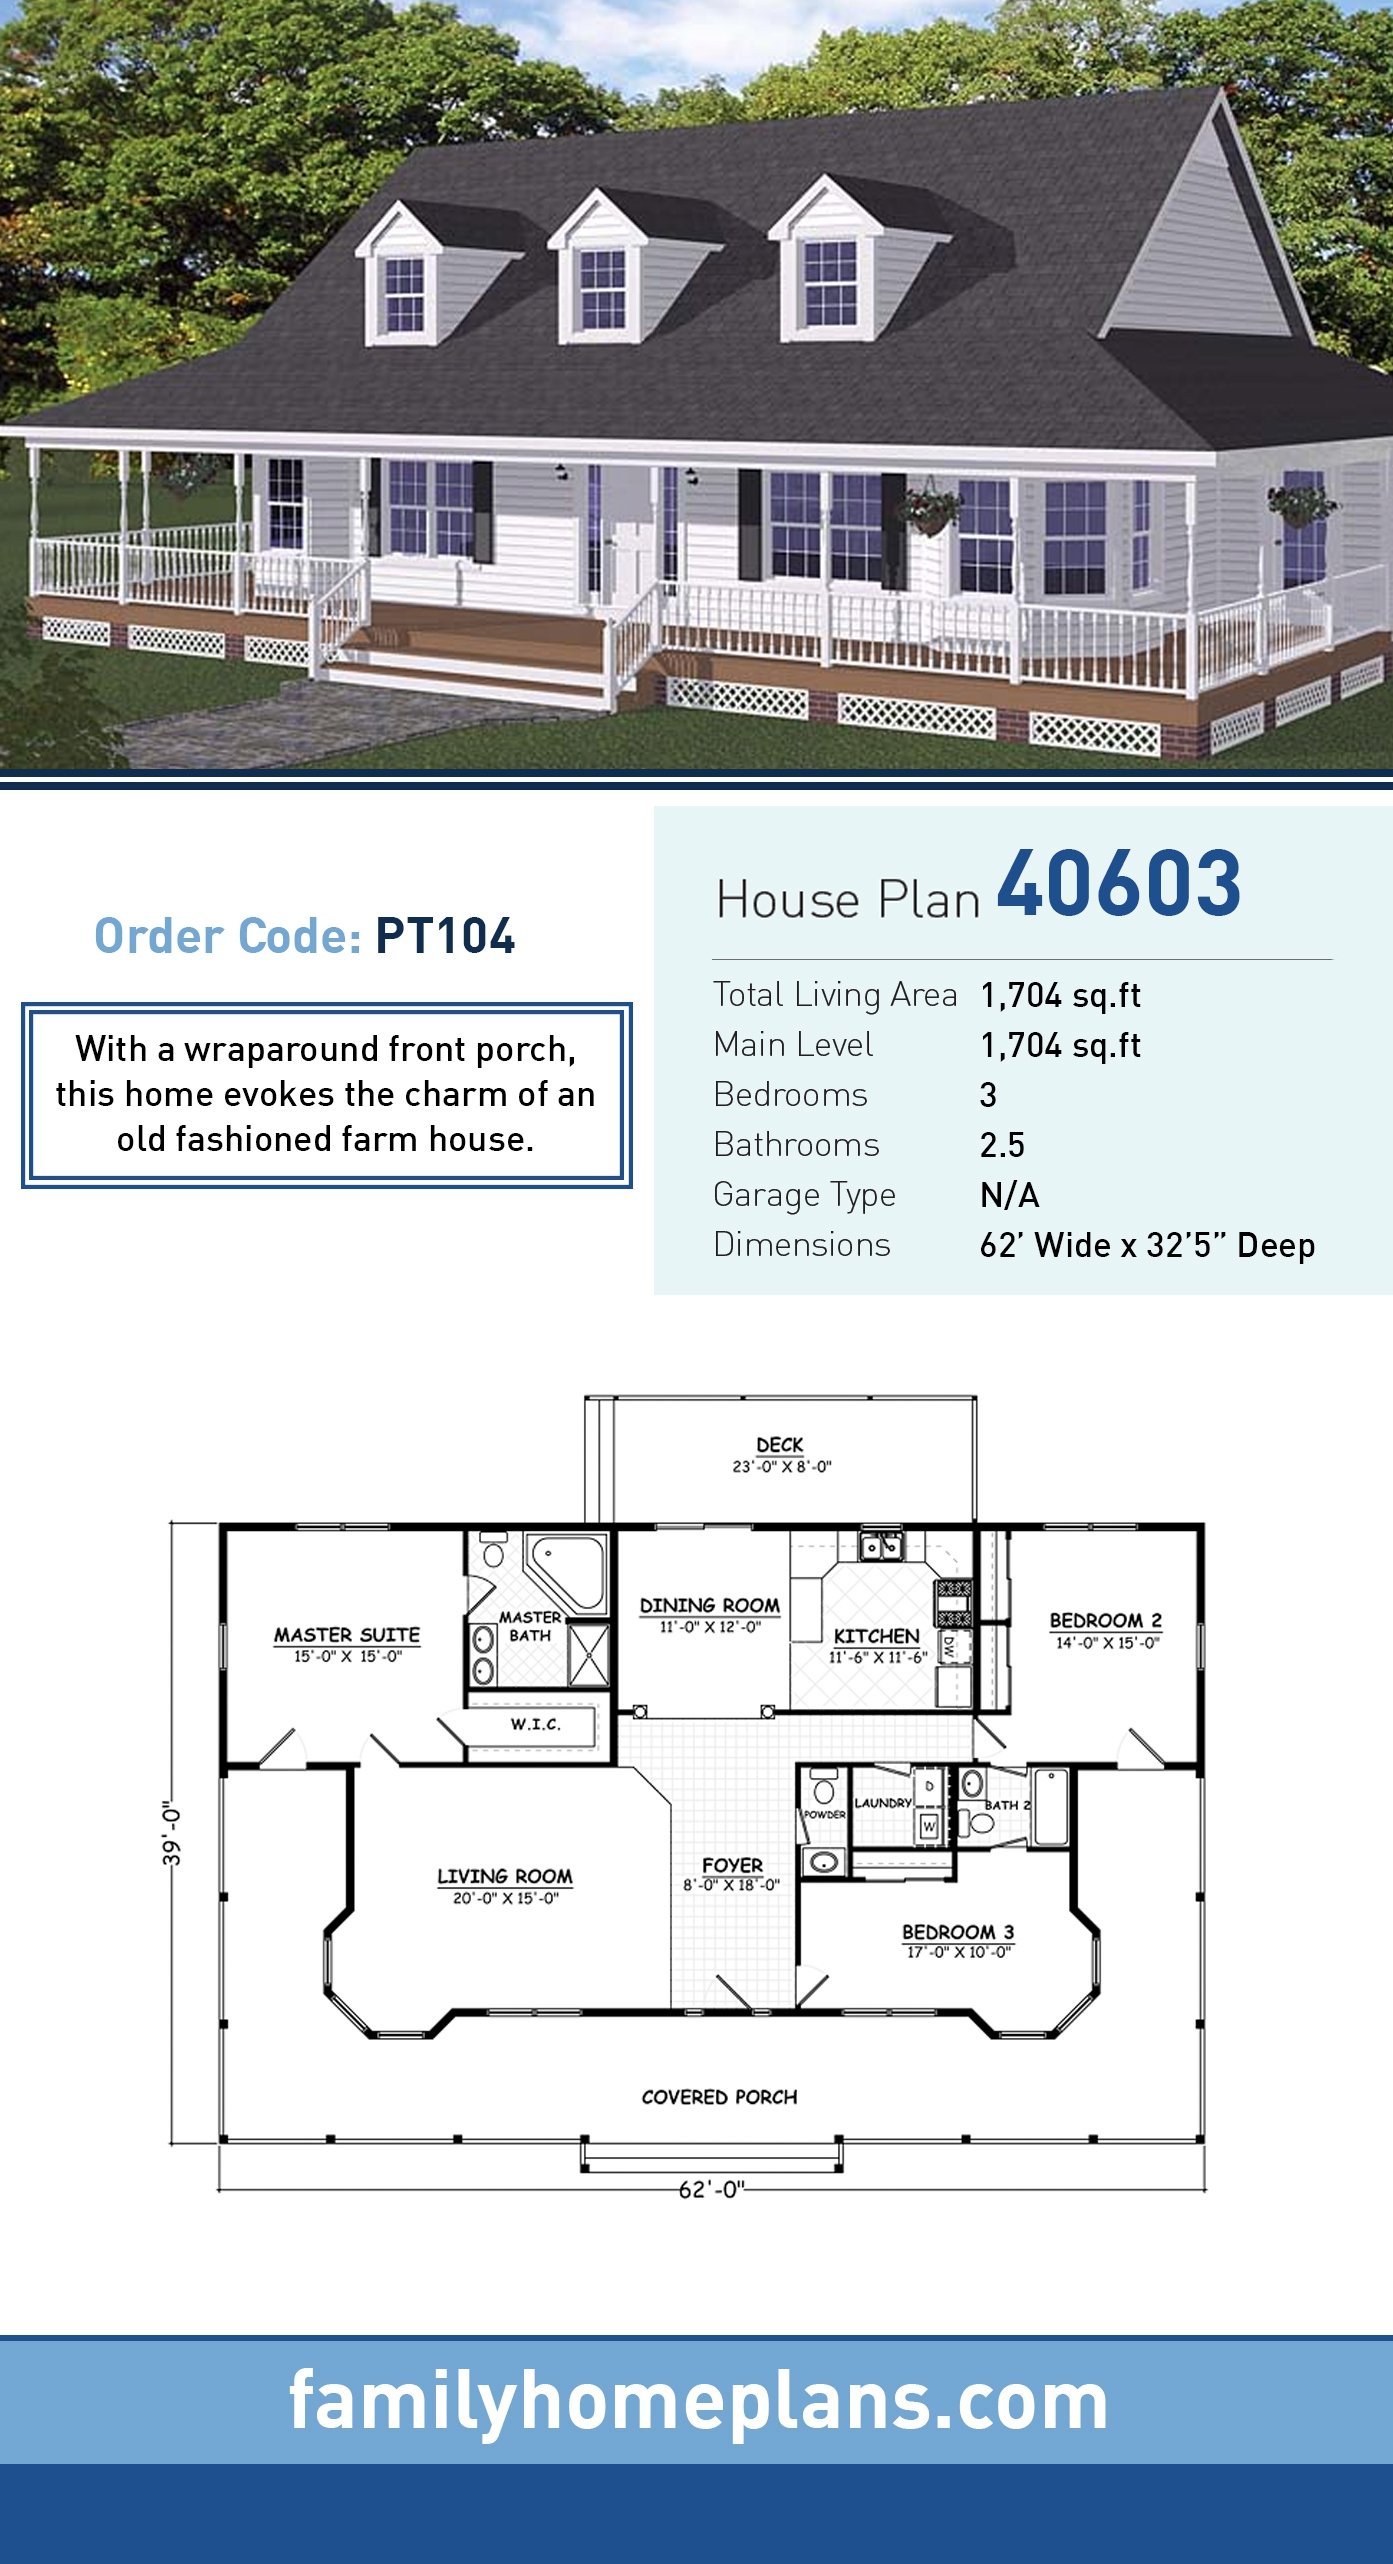 House Plan 40603